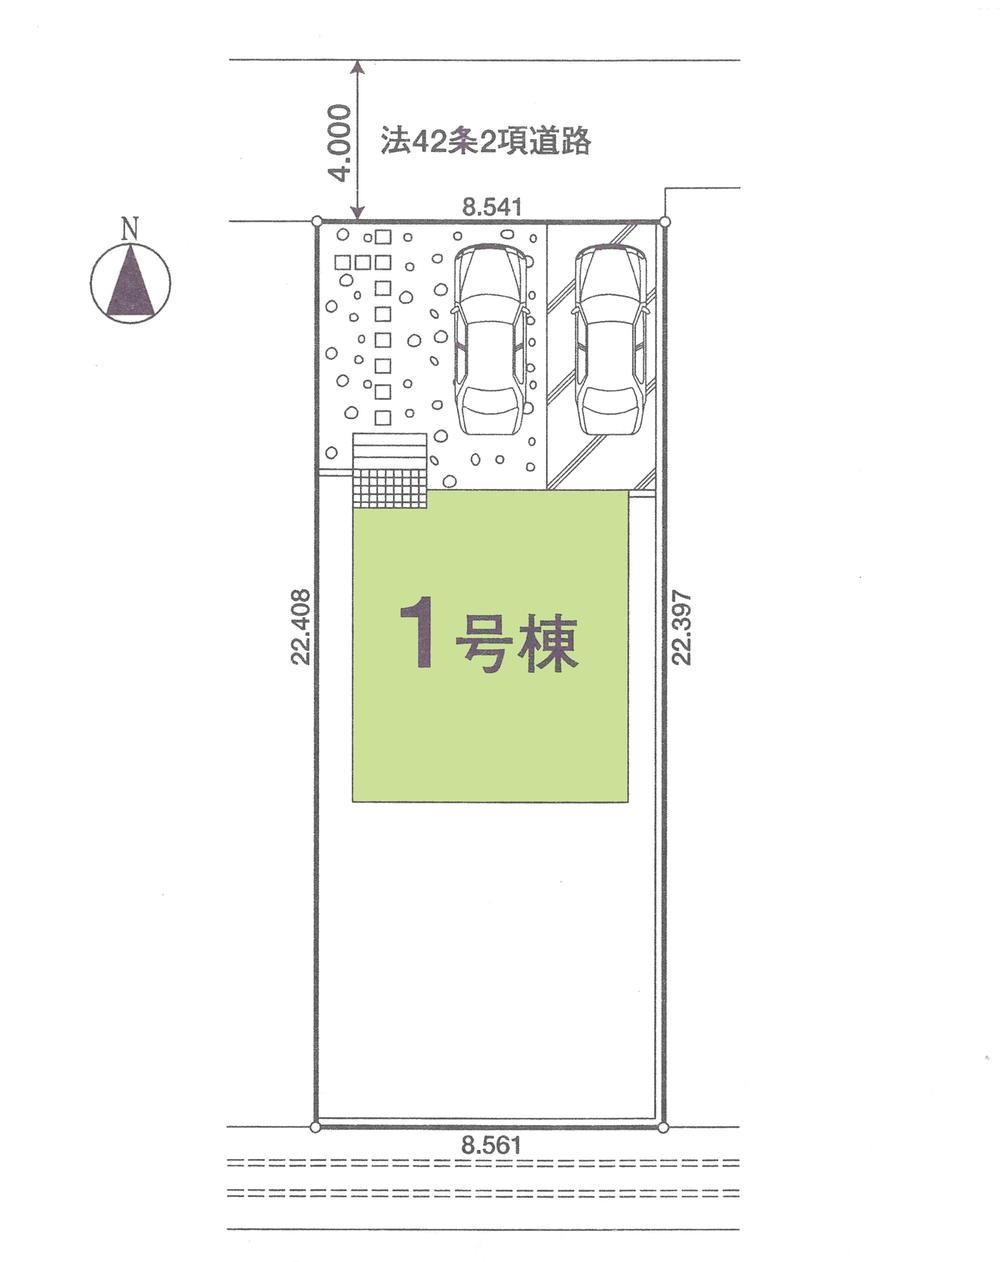 Compartment figure. 29,800,000 yen, 4LDK, Land area 191.56 sq m , Building area 96.78 sq m compartment view